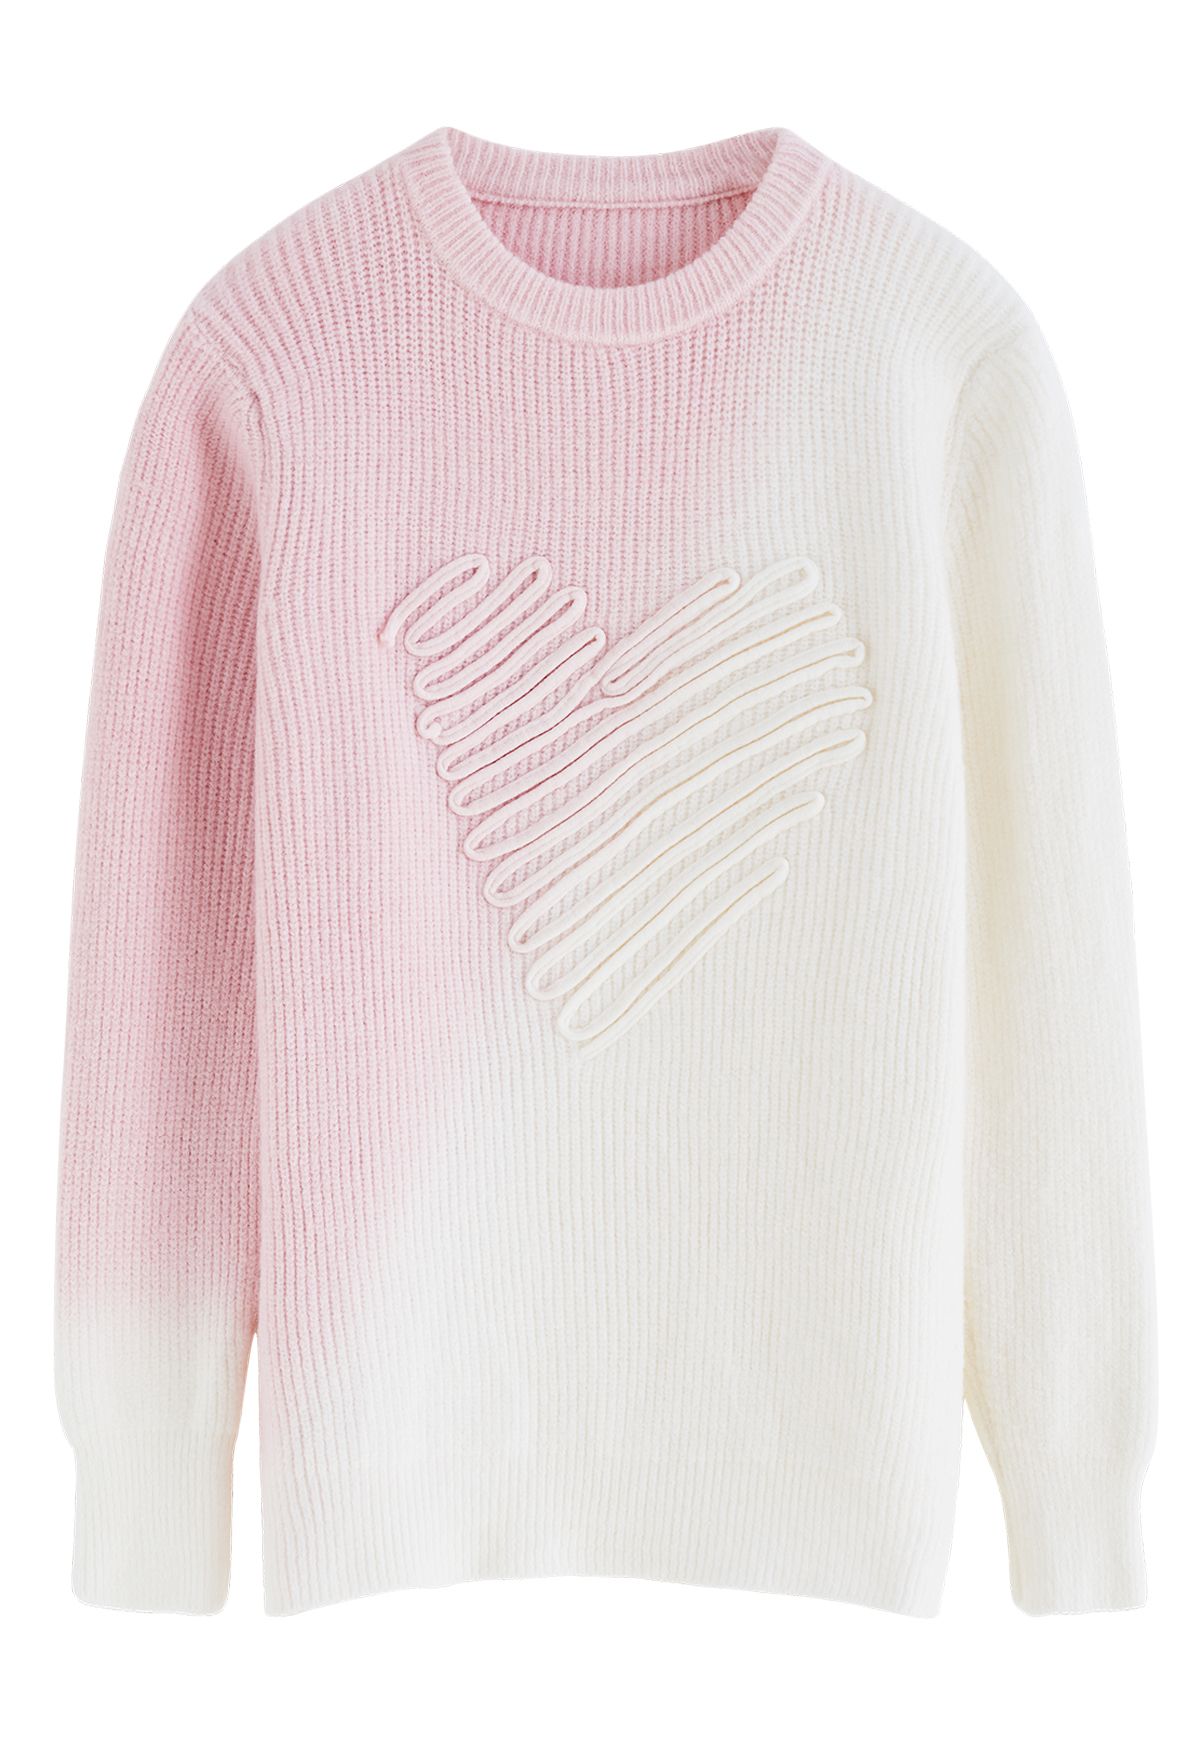 Suéter de punto con corazón garabato degradado en rosa